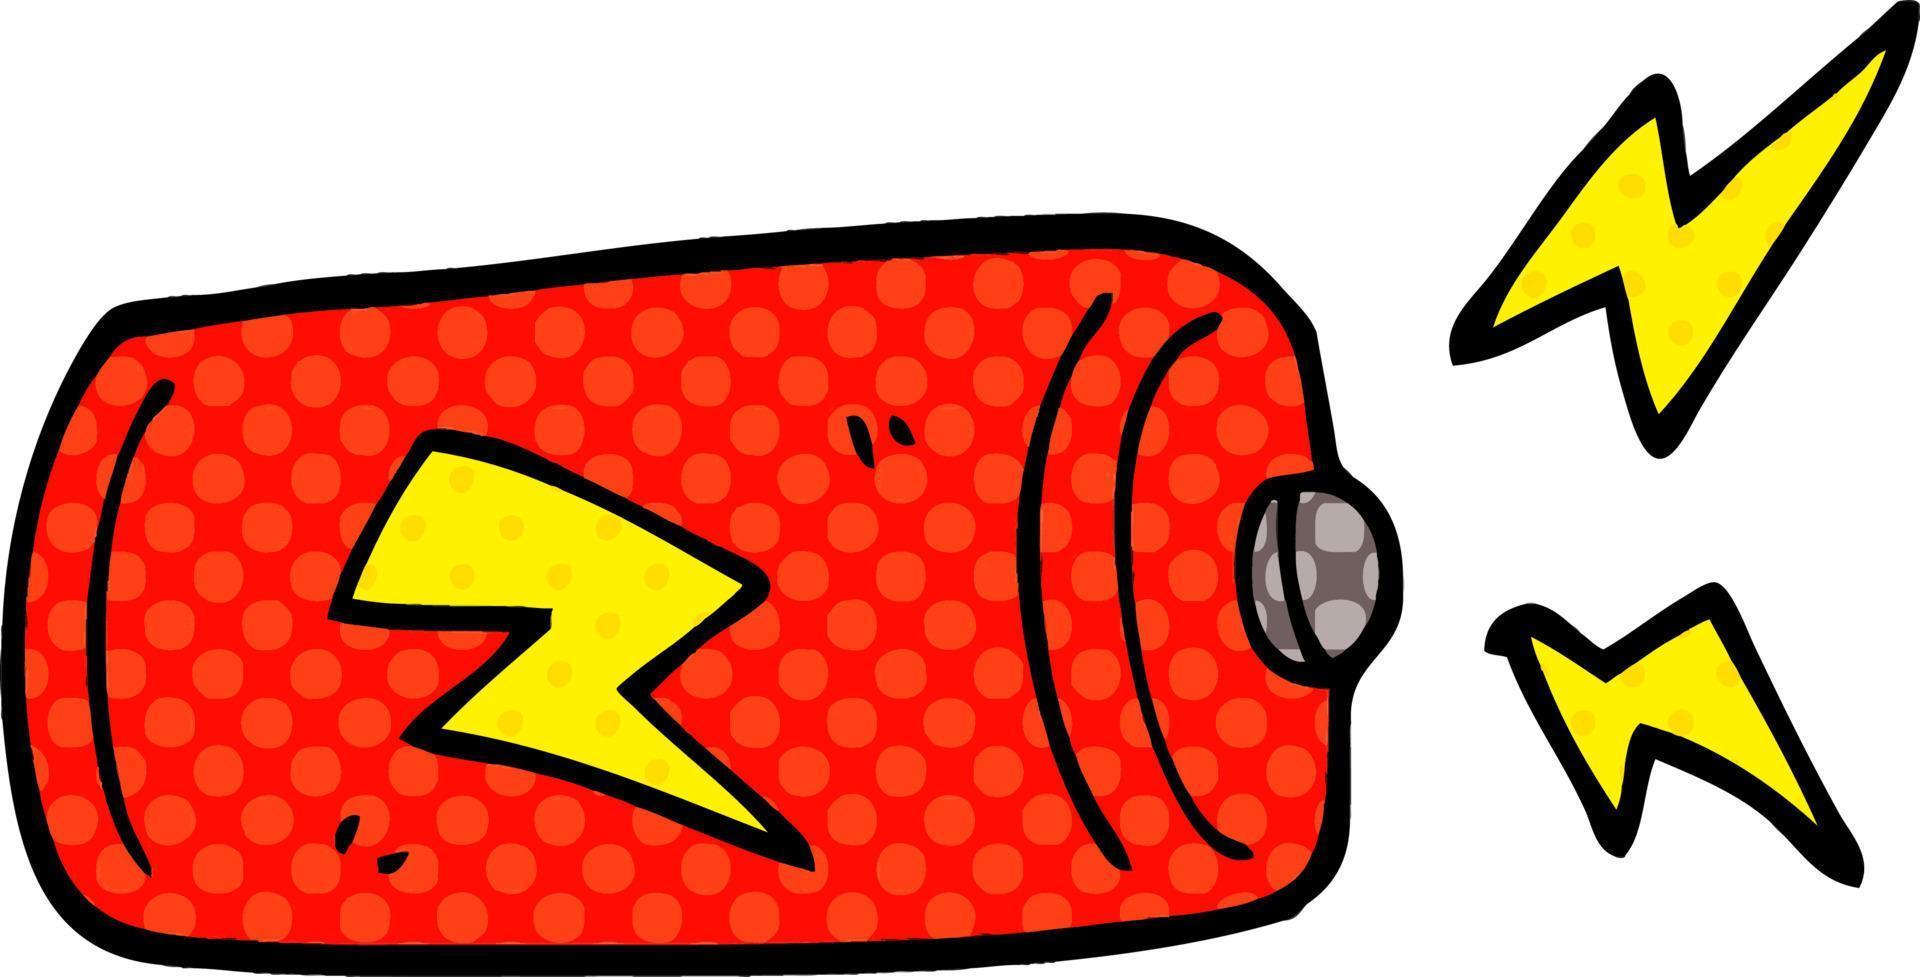 Cartoon-Doodle-Batterie vektor